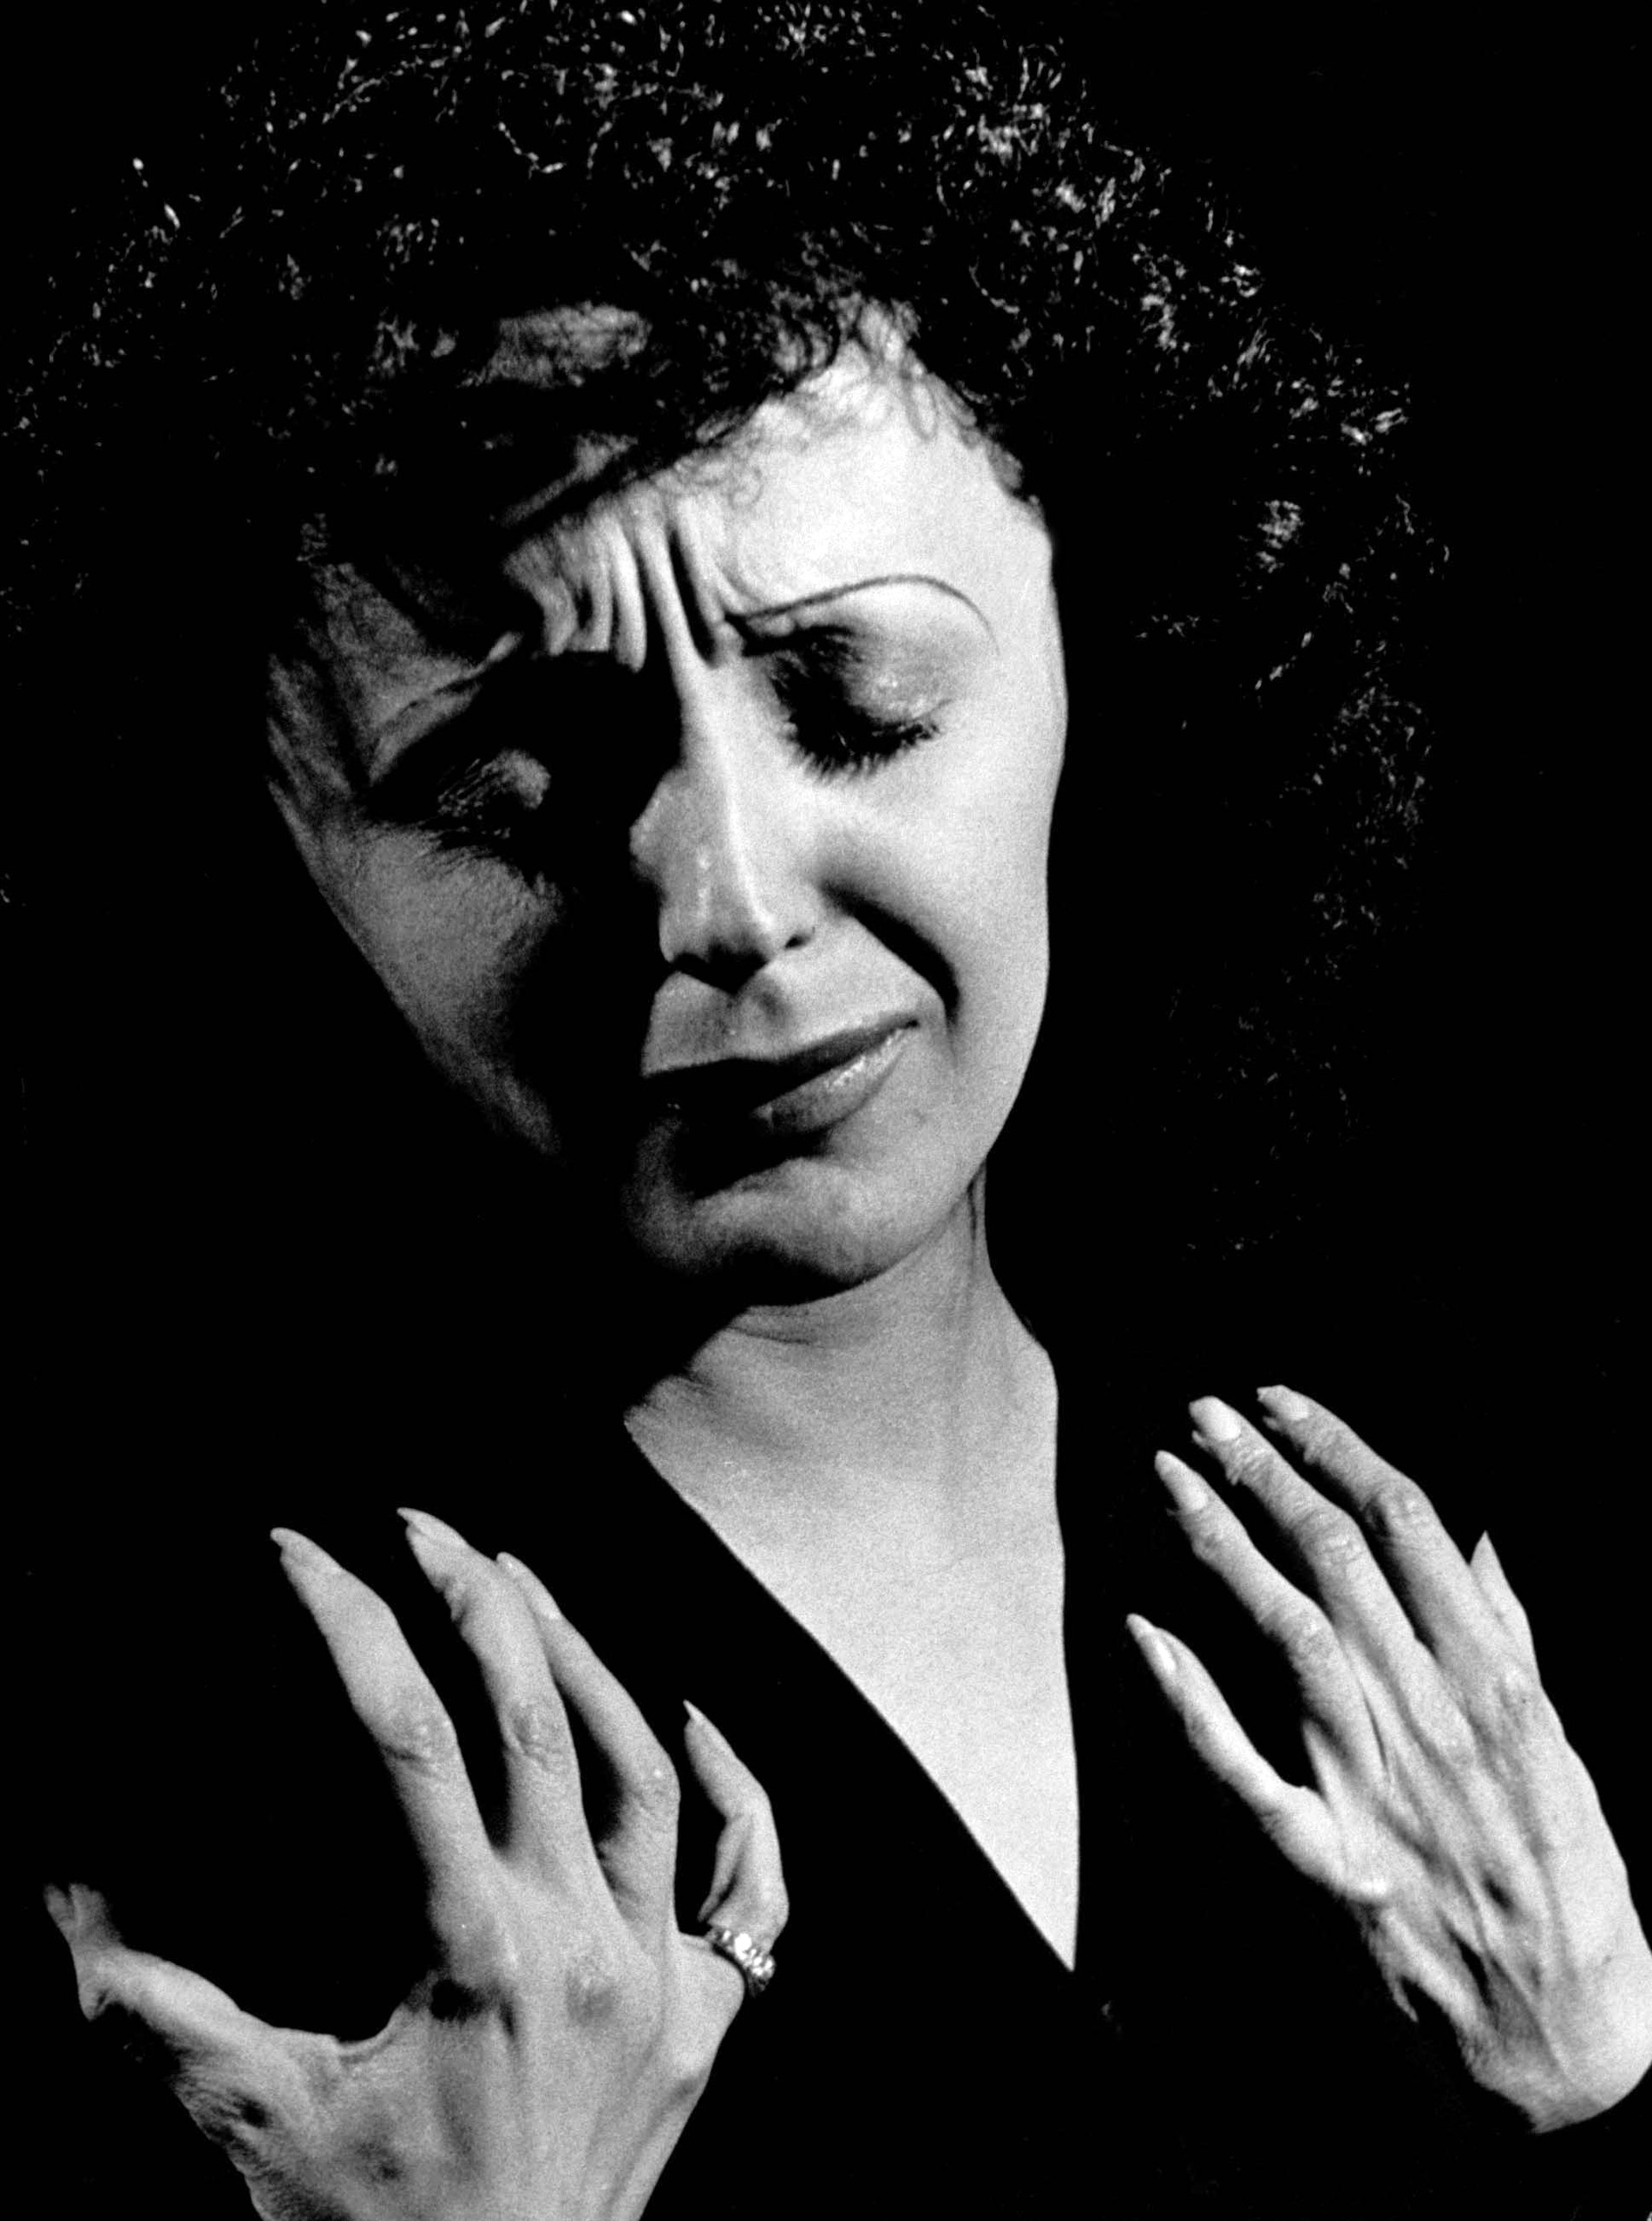 Edith Piaf performing in 1946.